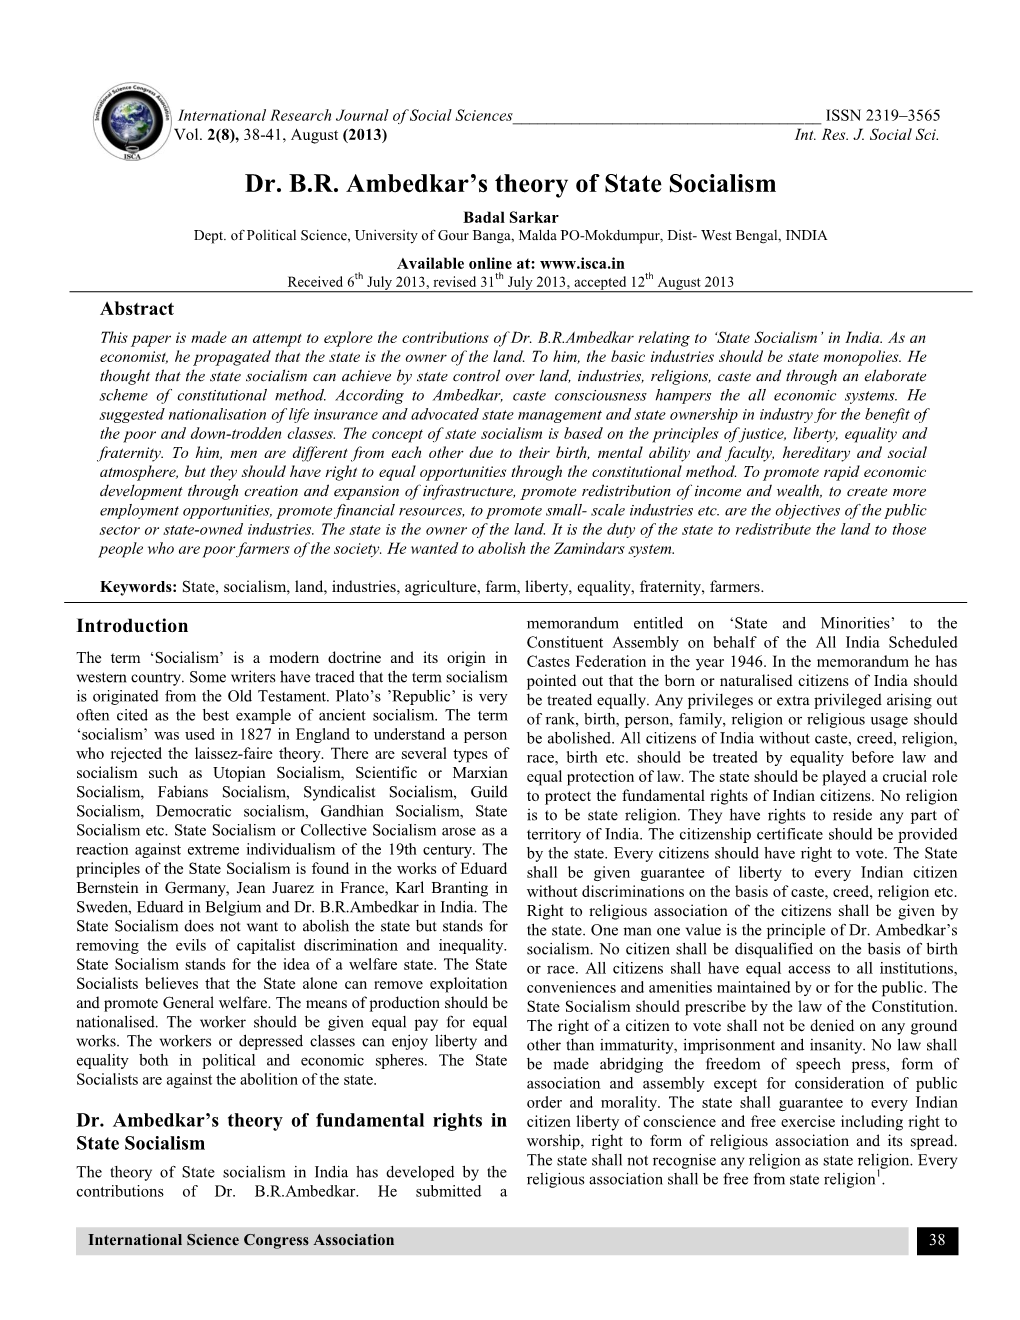 Dr. B.R. Ambedkar's Theory of State Socialism